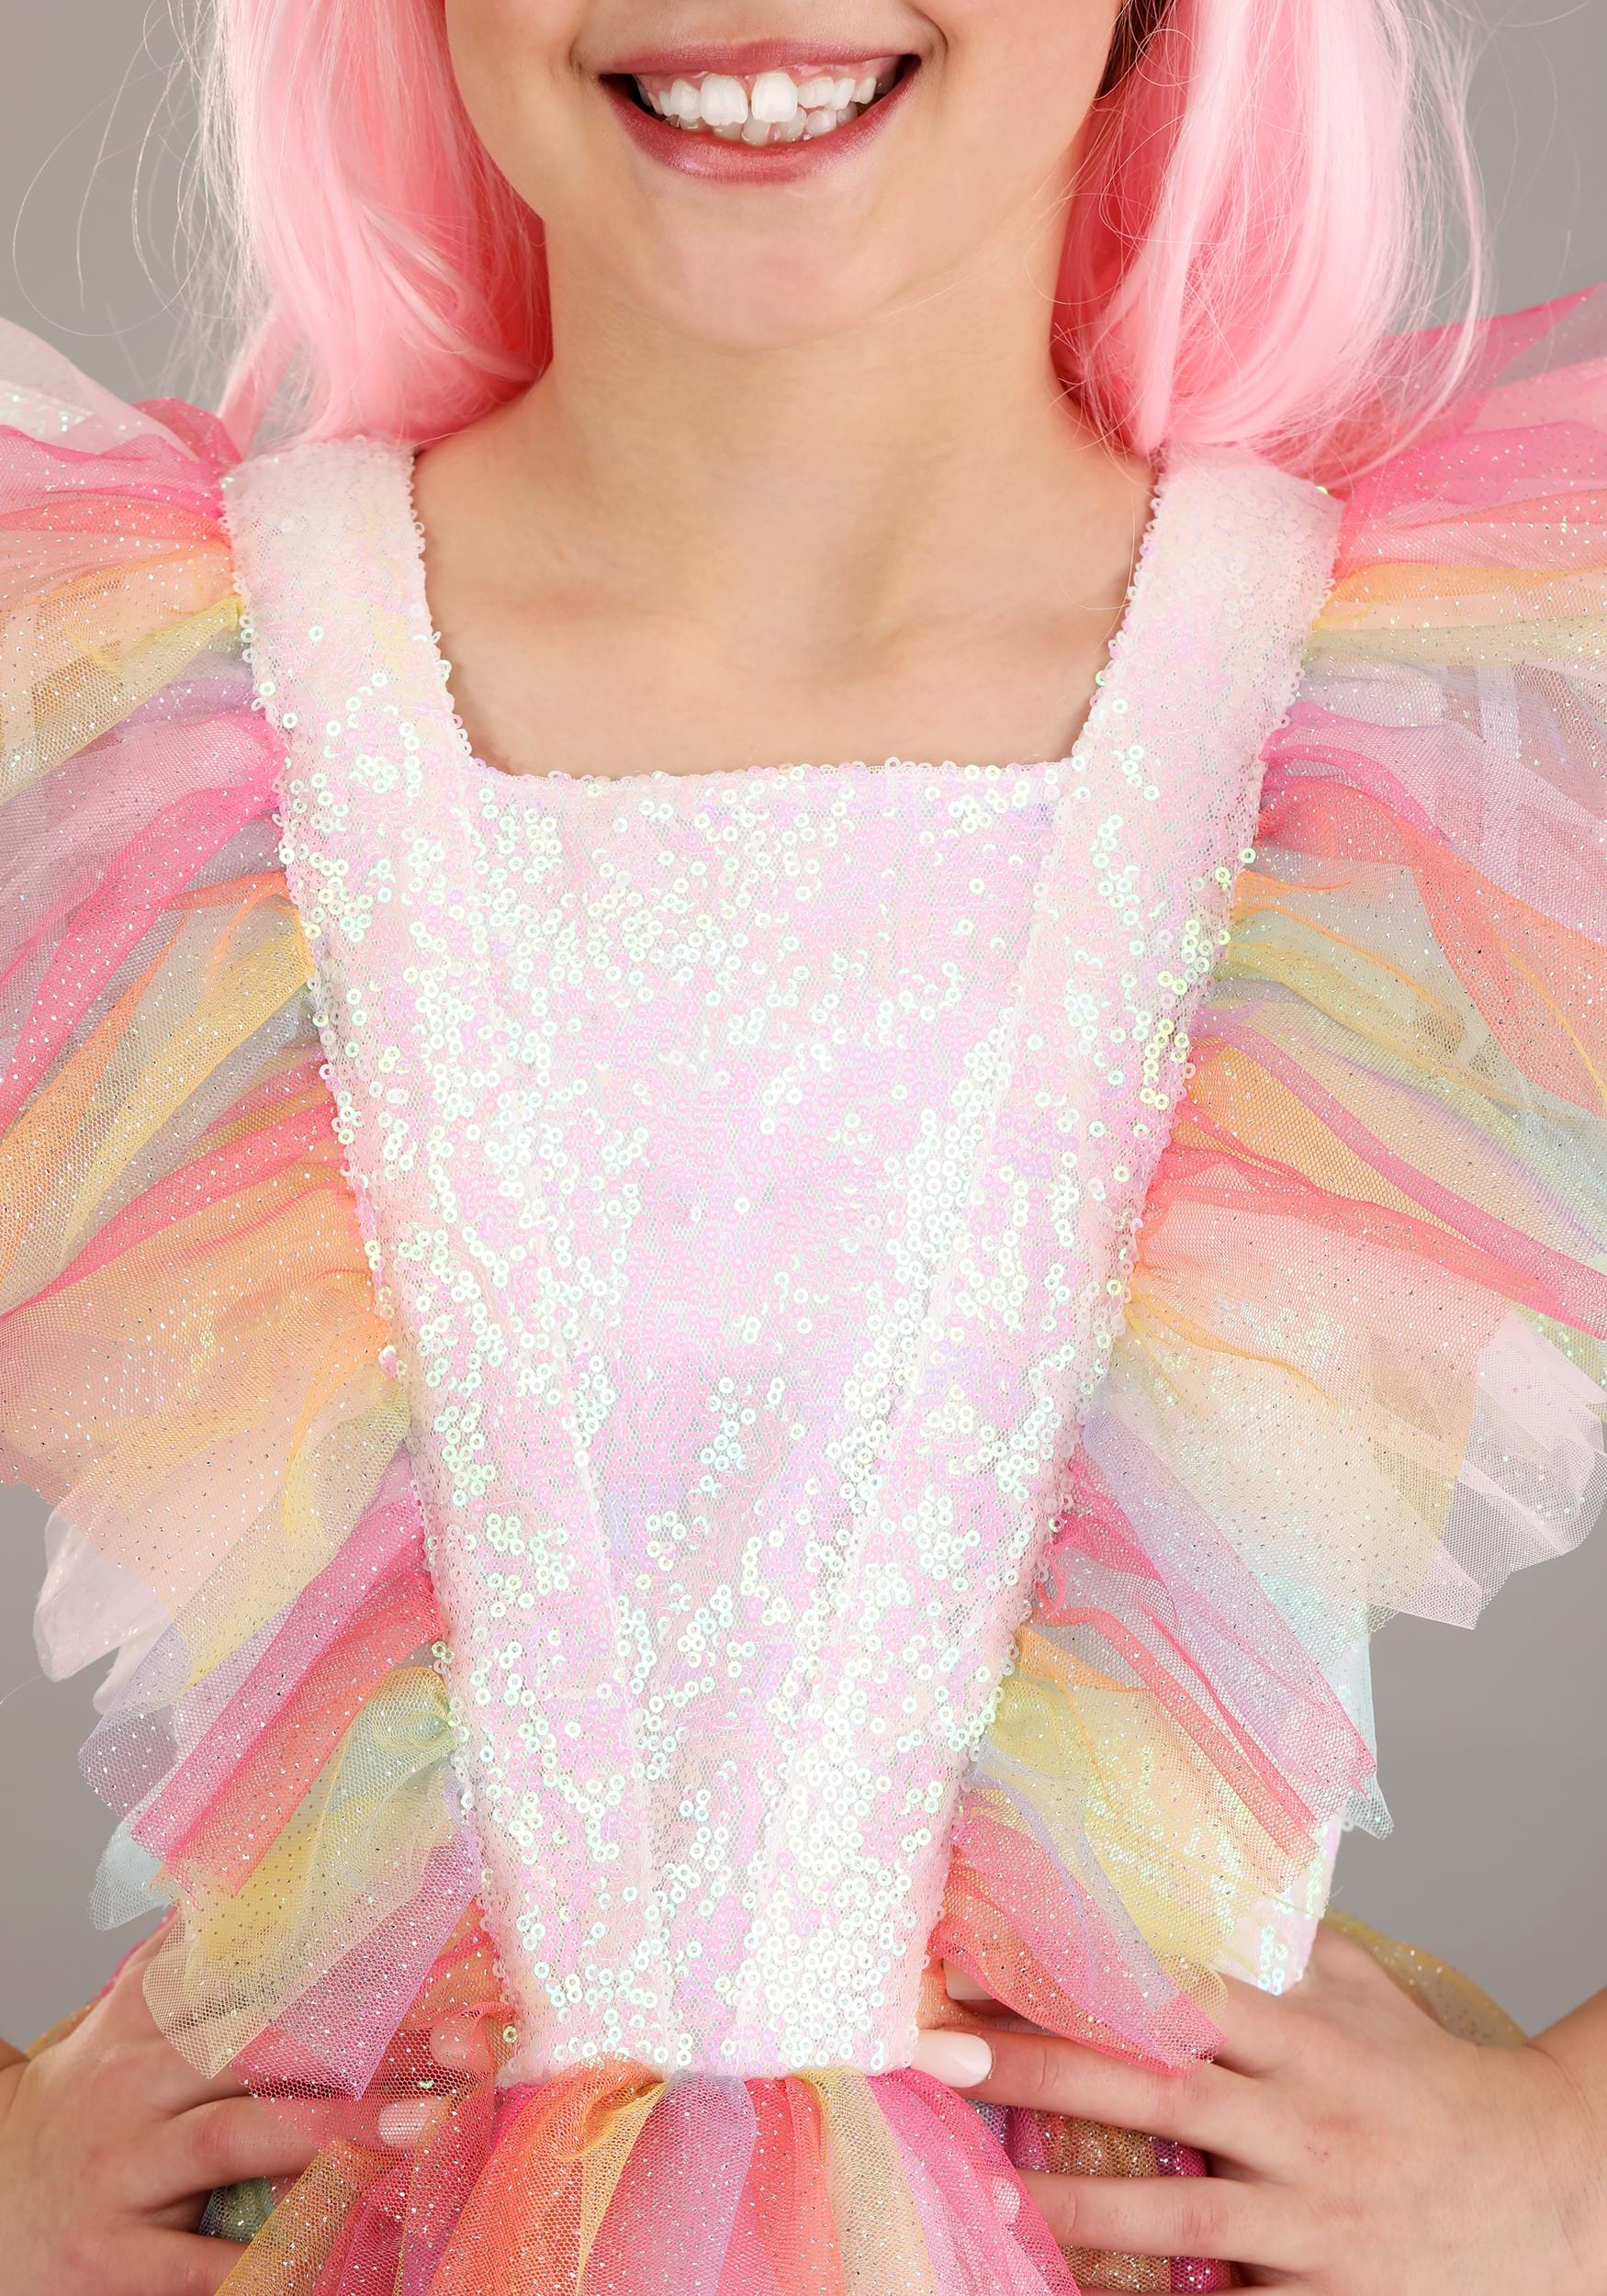 Deluxe Winged Unicorn Girl's Costume